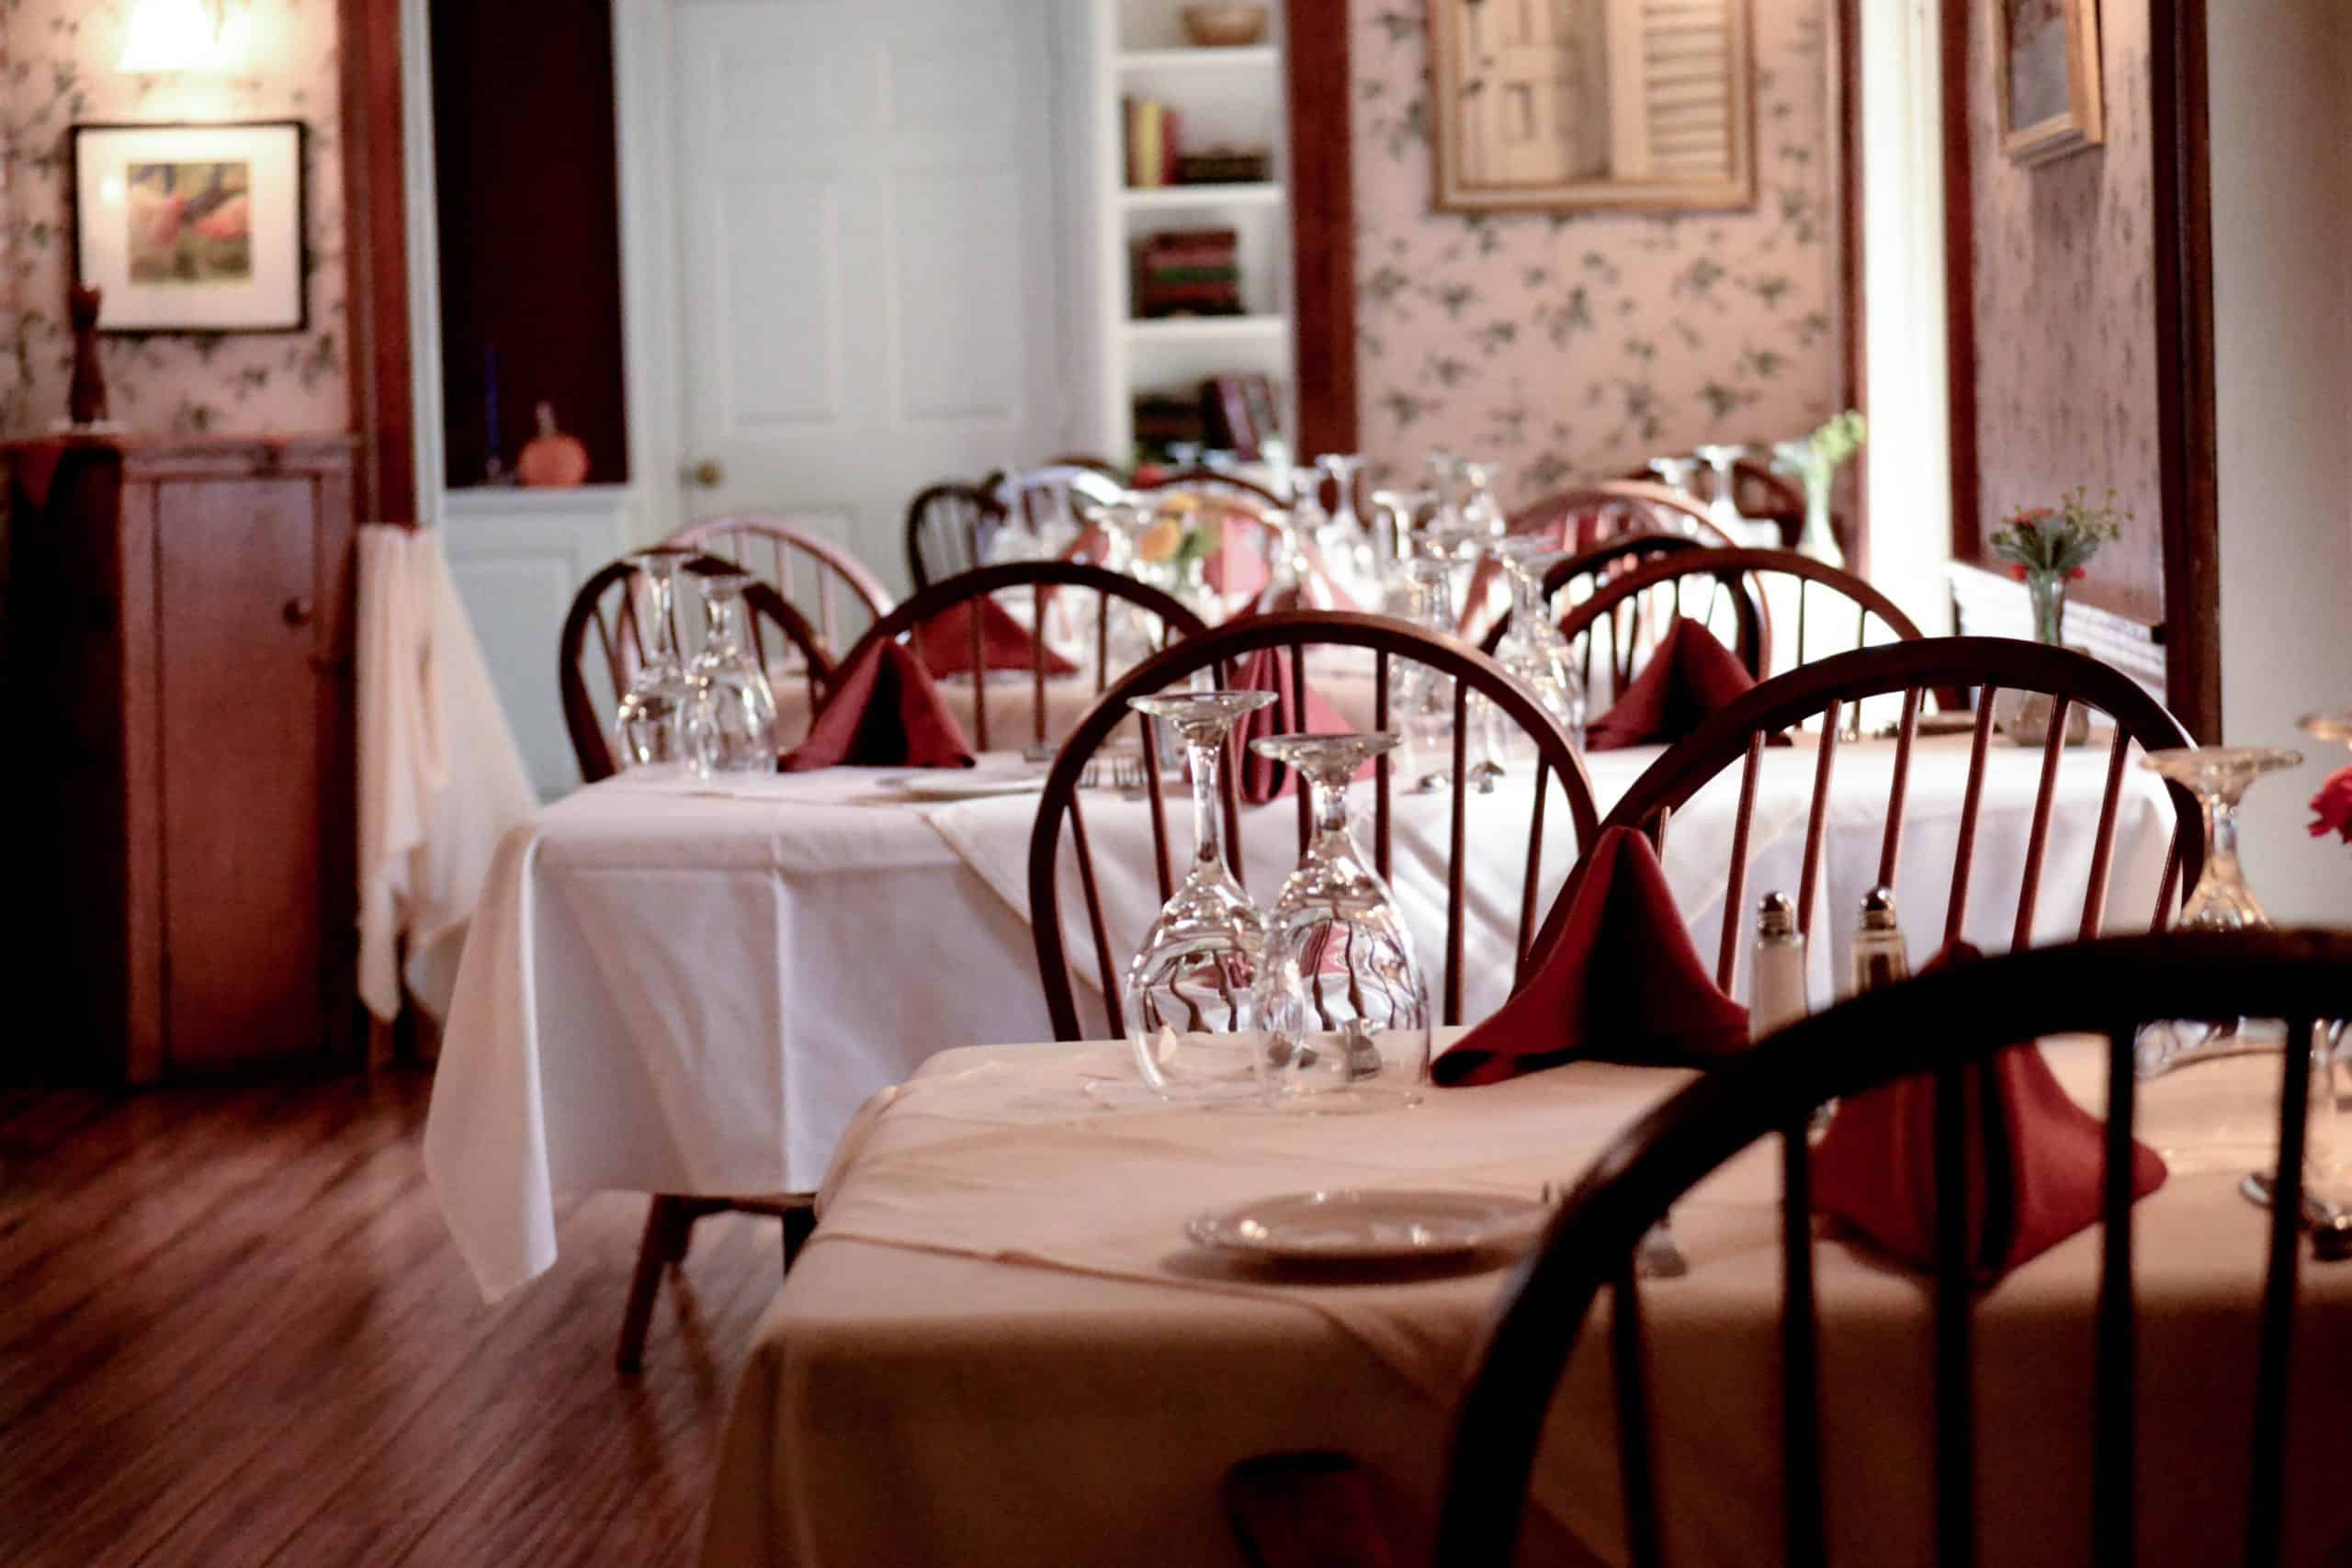 Quechee Inn at Marshland Farm - Restaurant Dining Tables